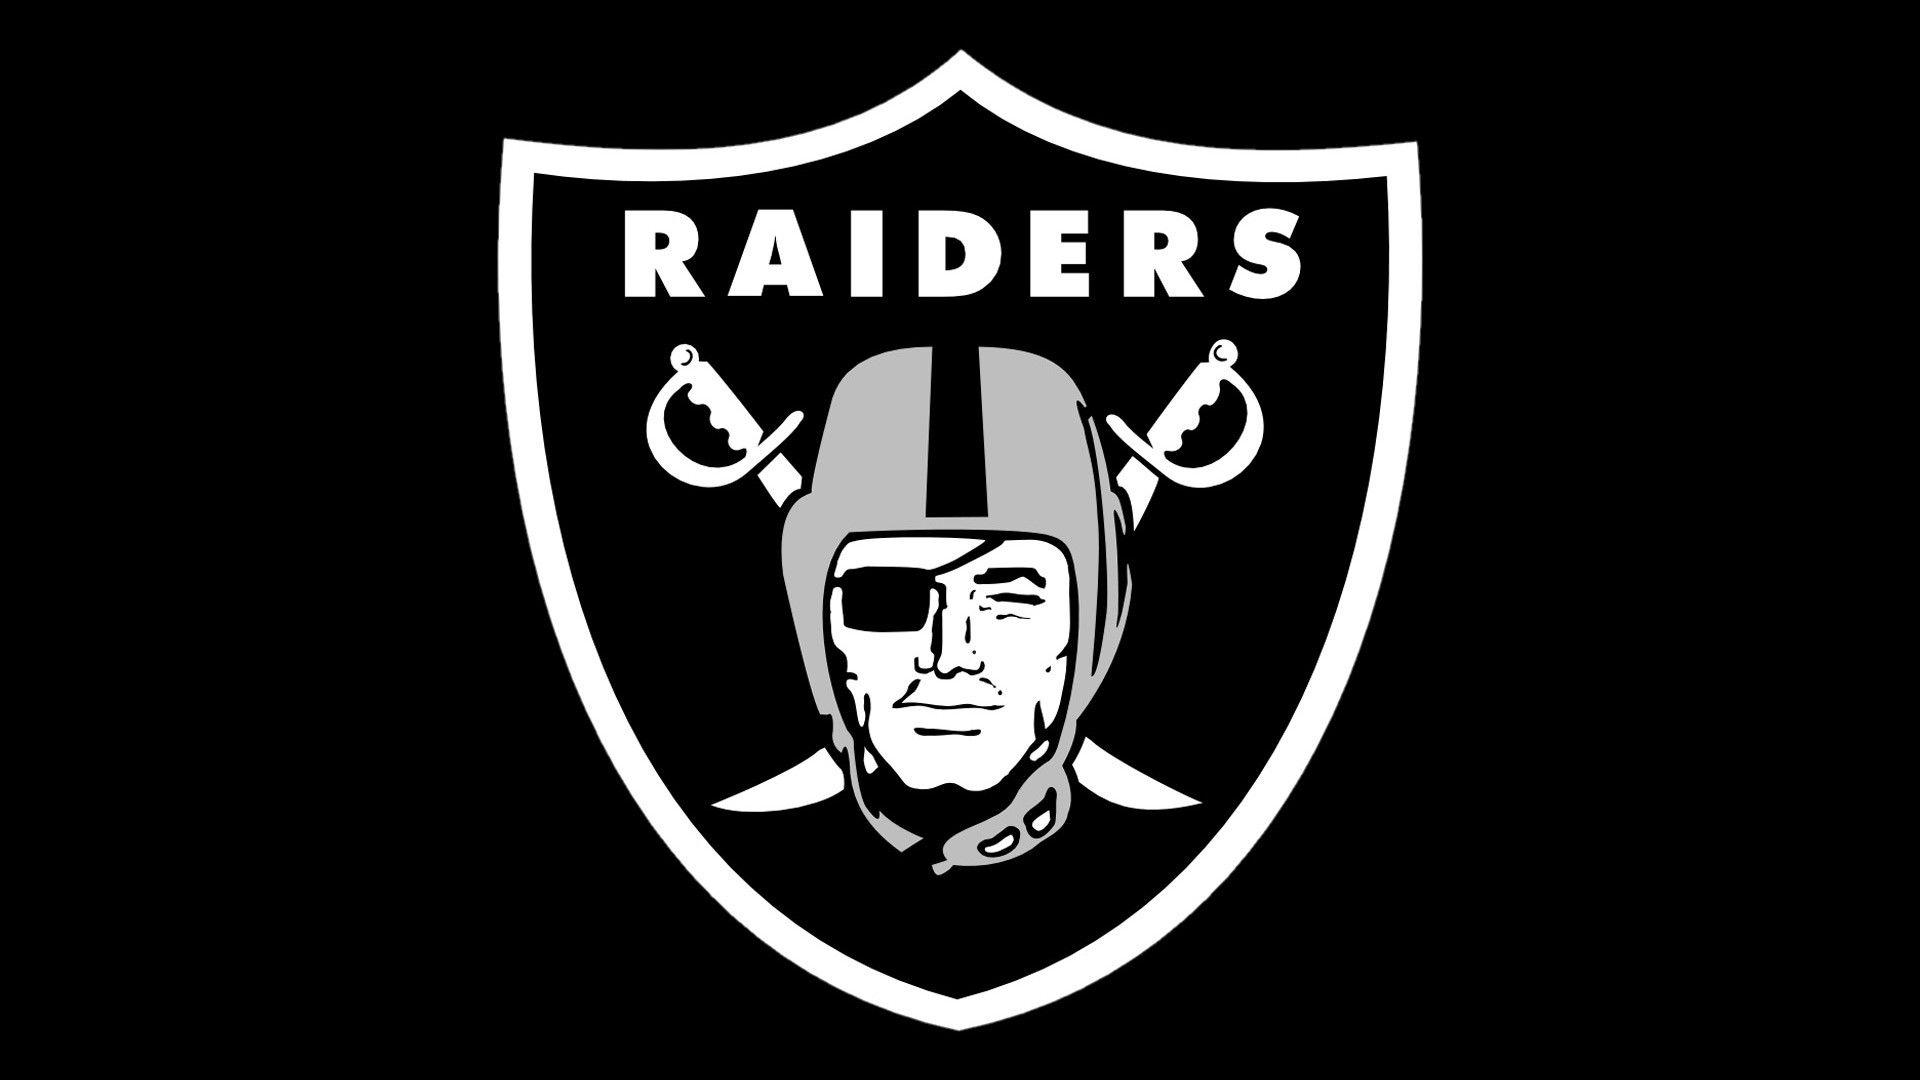 Oakland Raiders Professional American Football Franchise Logo